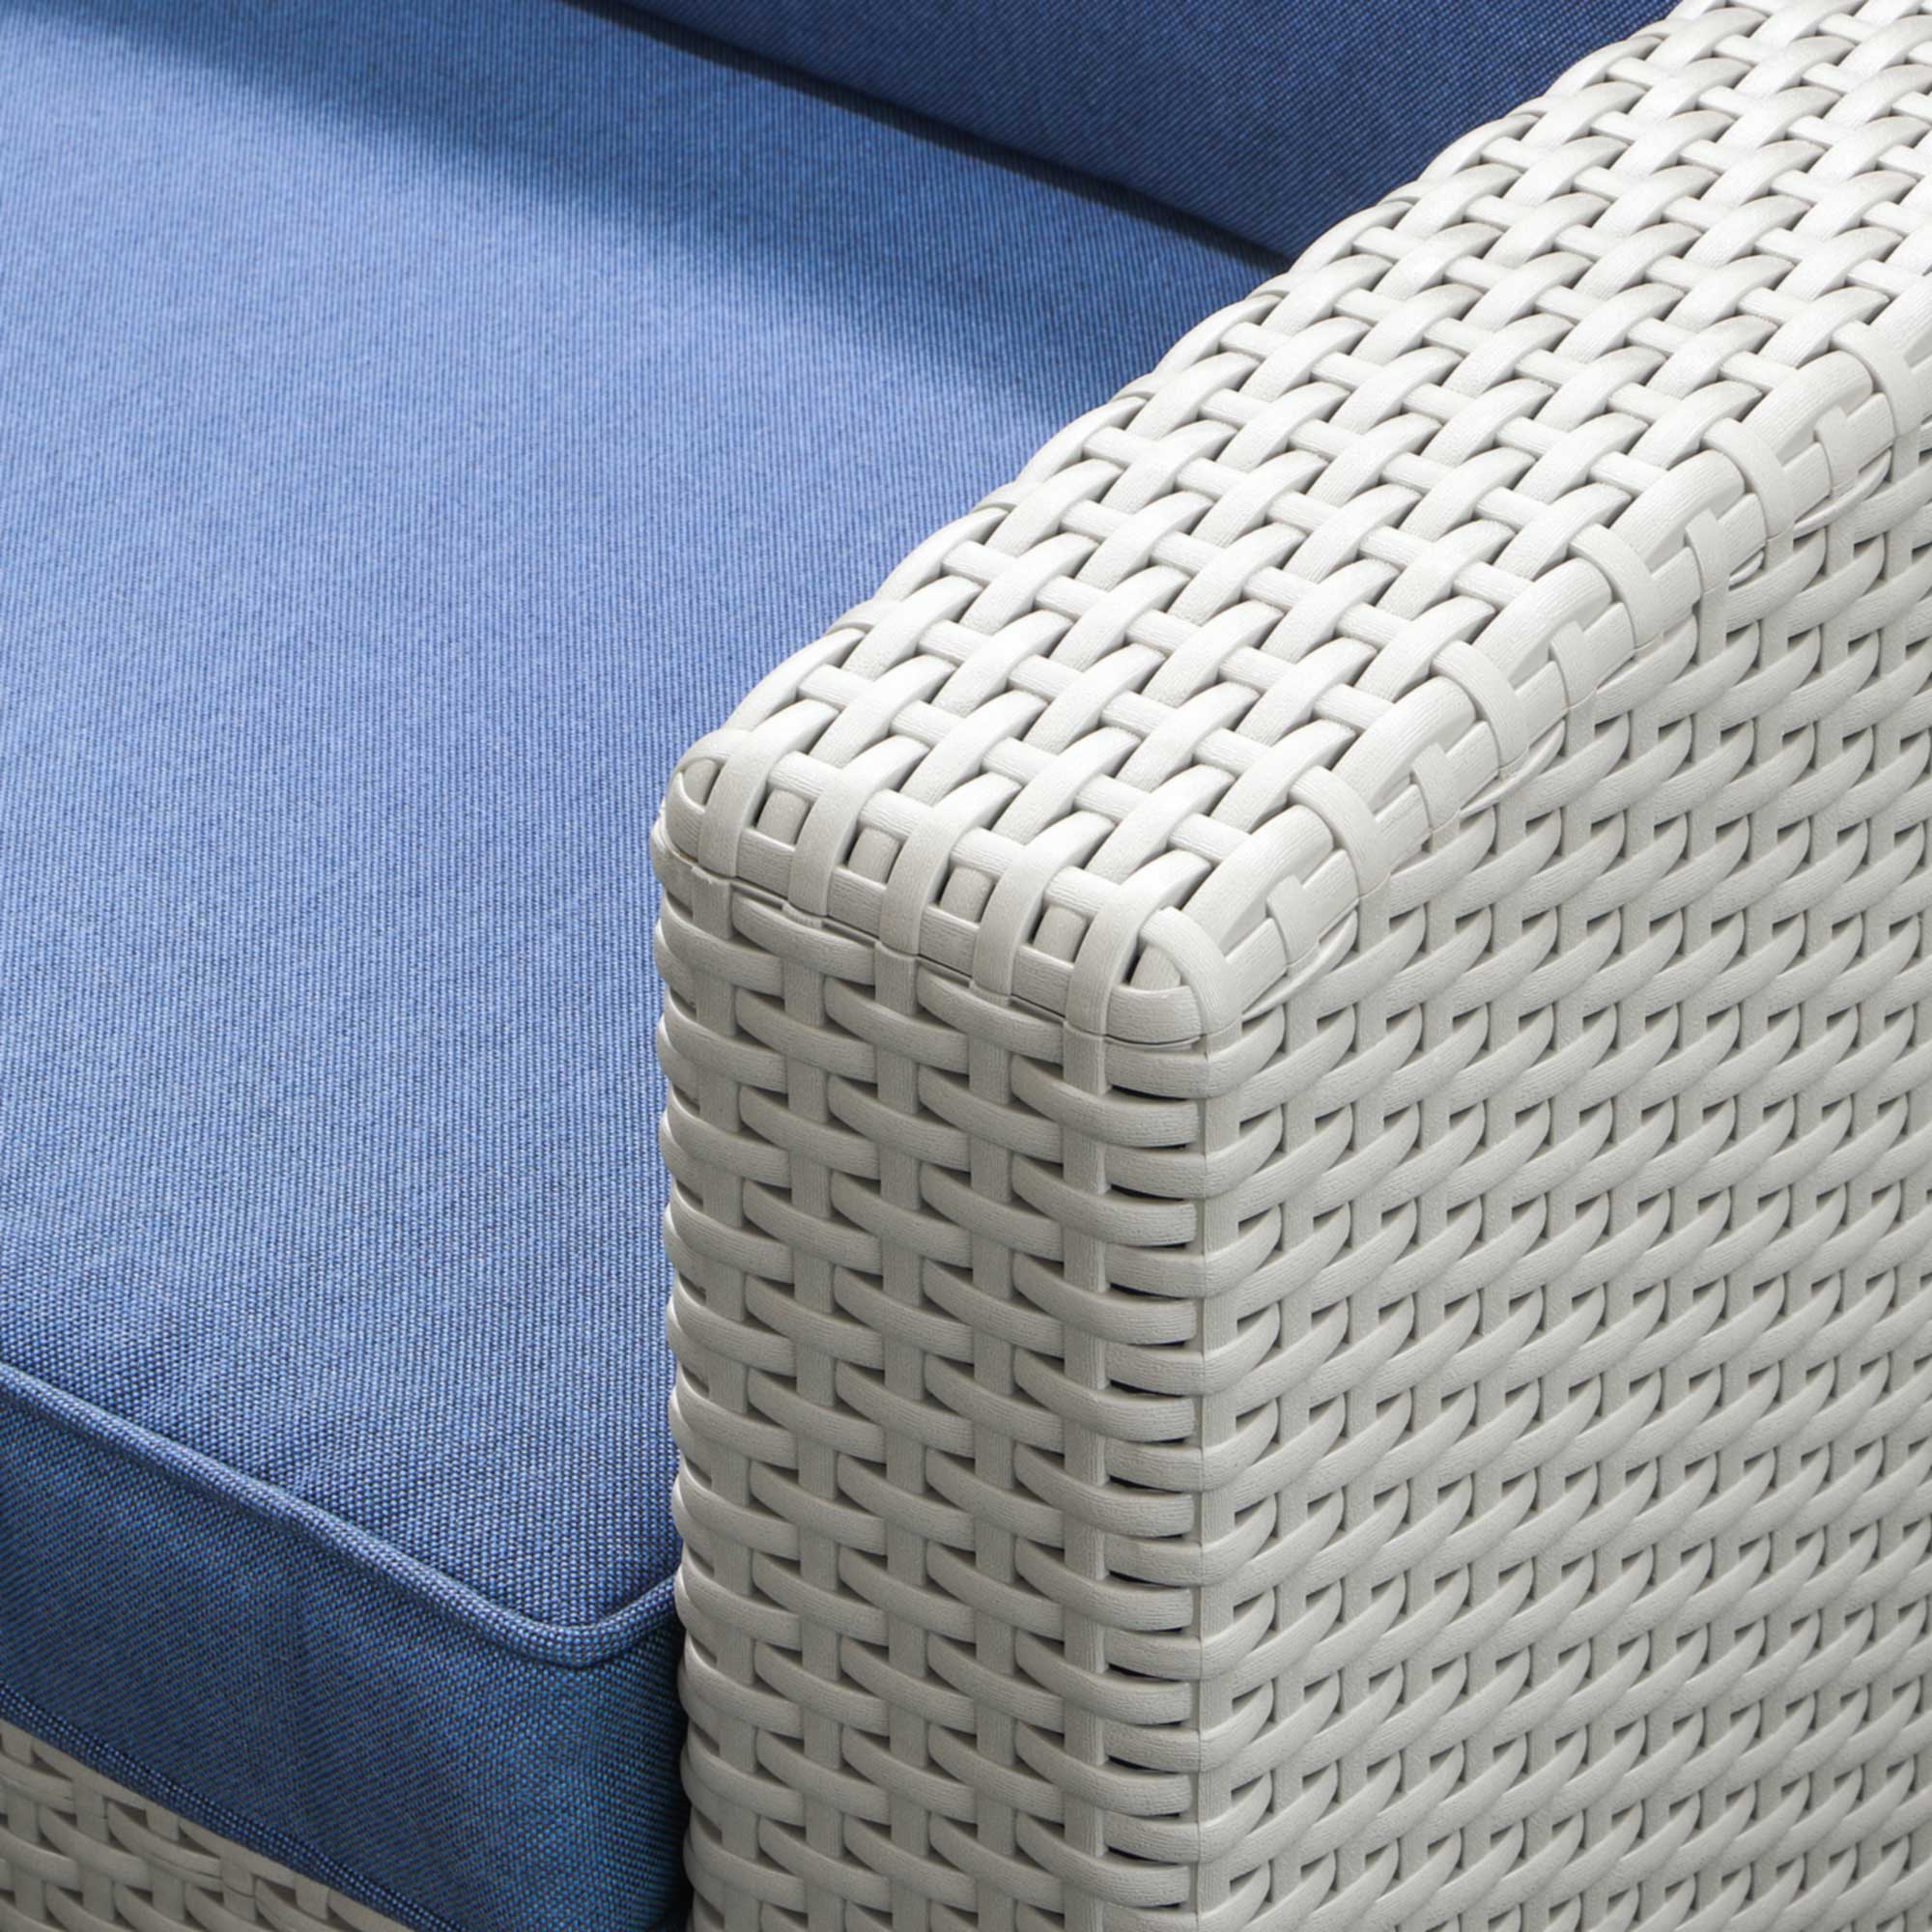 Комплект мебели LF угловой серый, цвет синий, размер 260/210х70х80 - фото 6